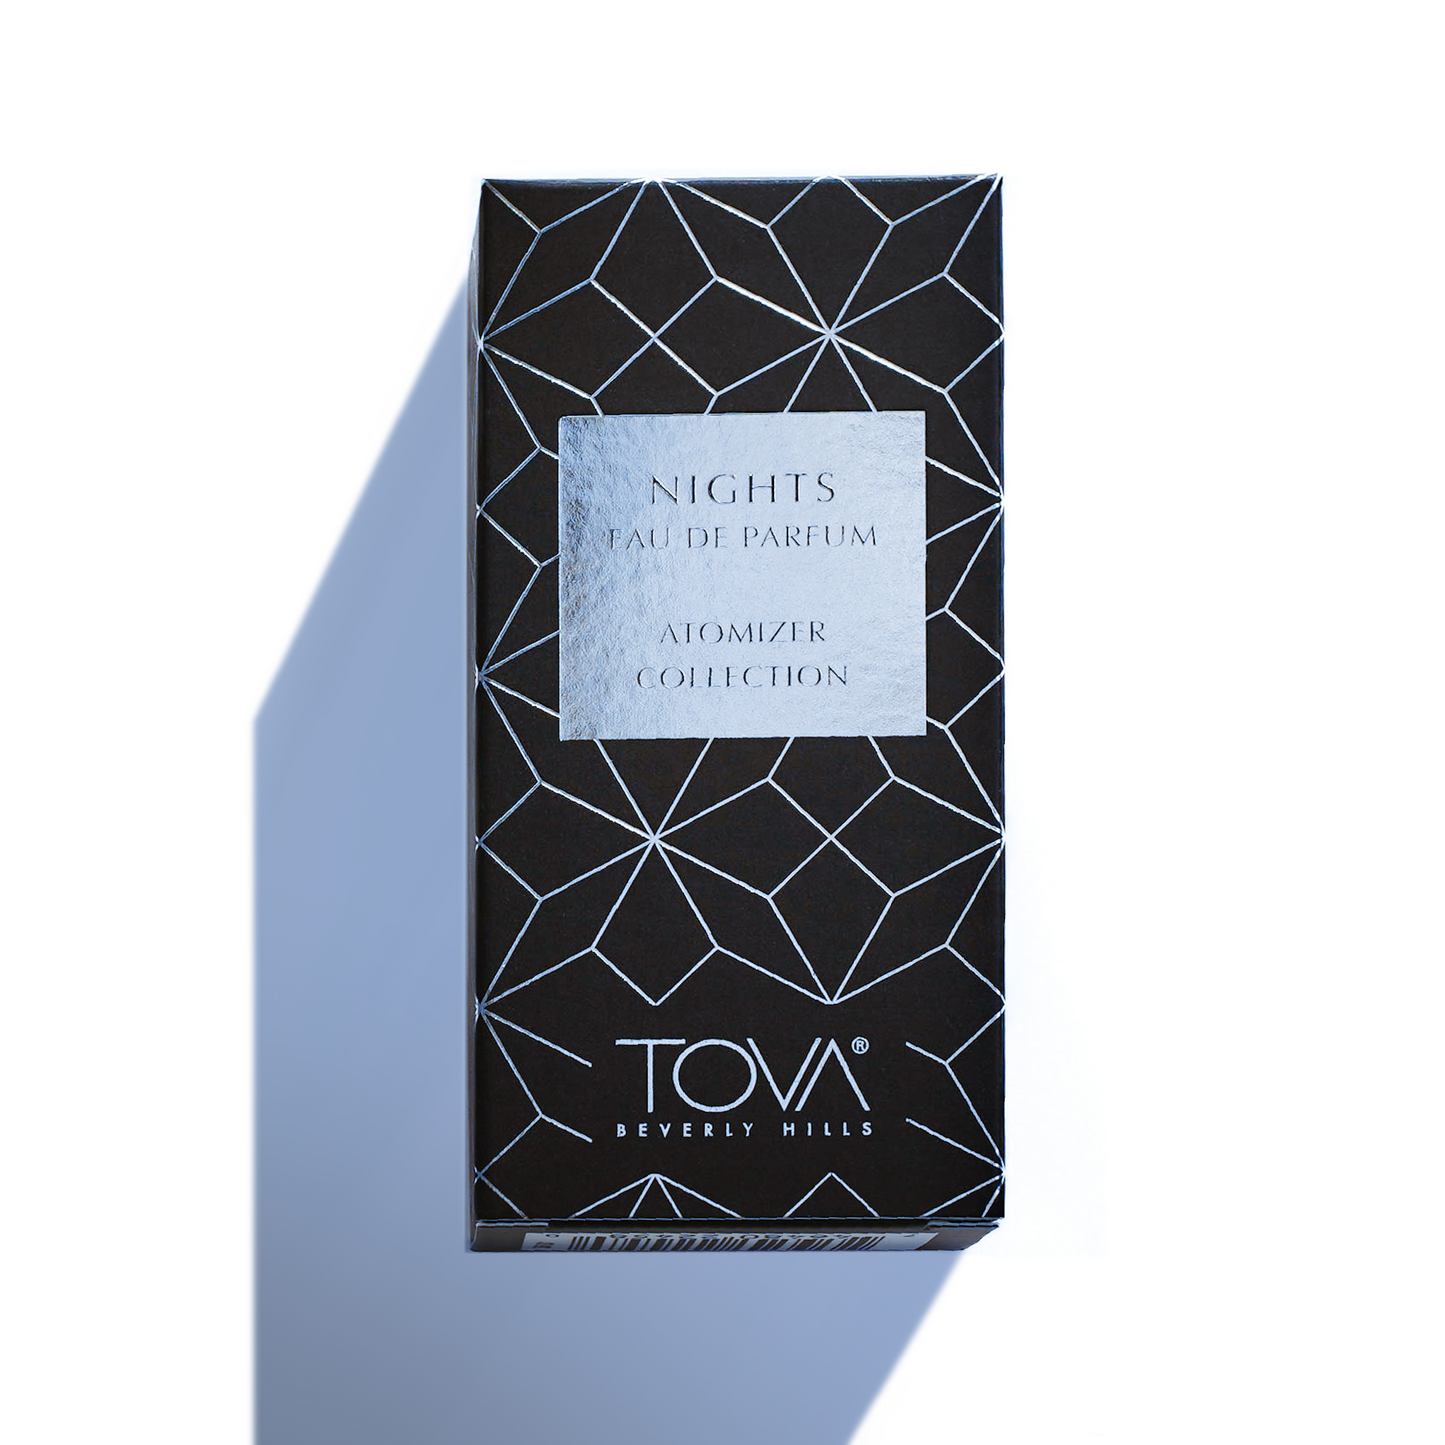 TOVA Nights Purse Atomizer Collection